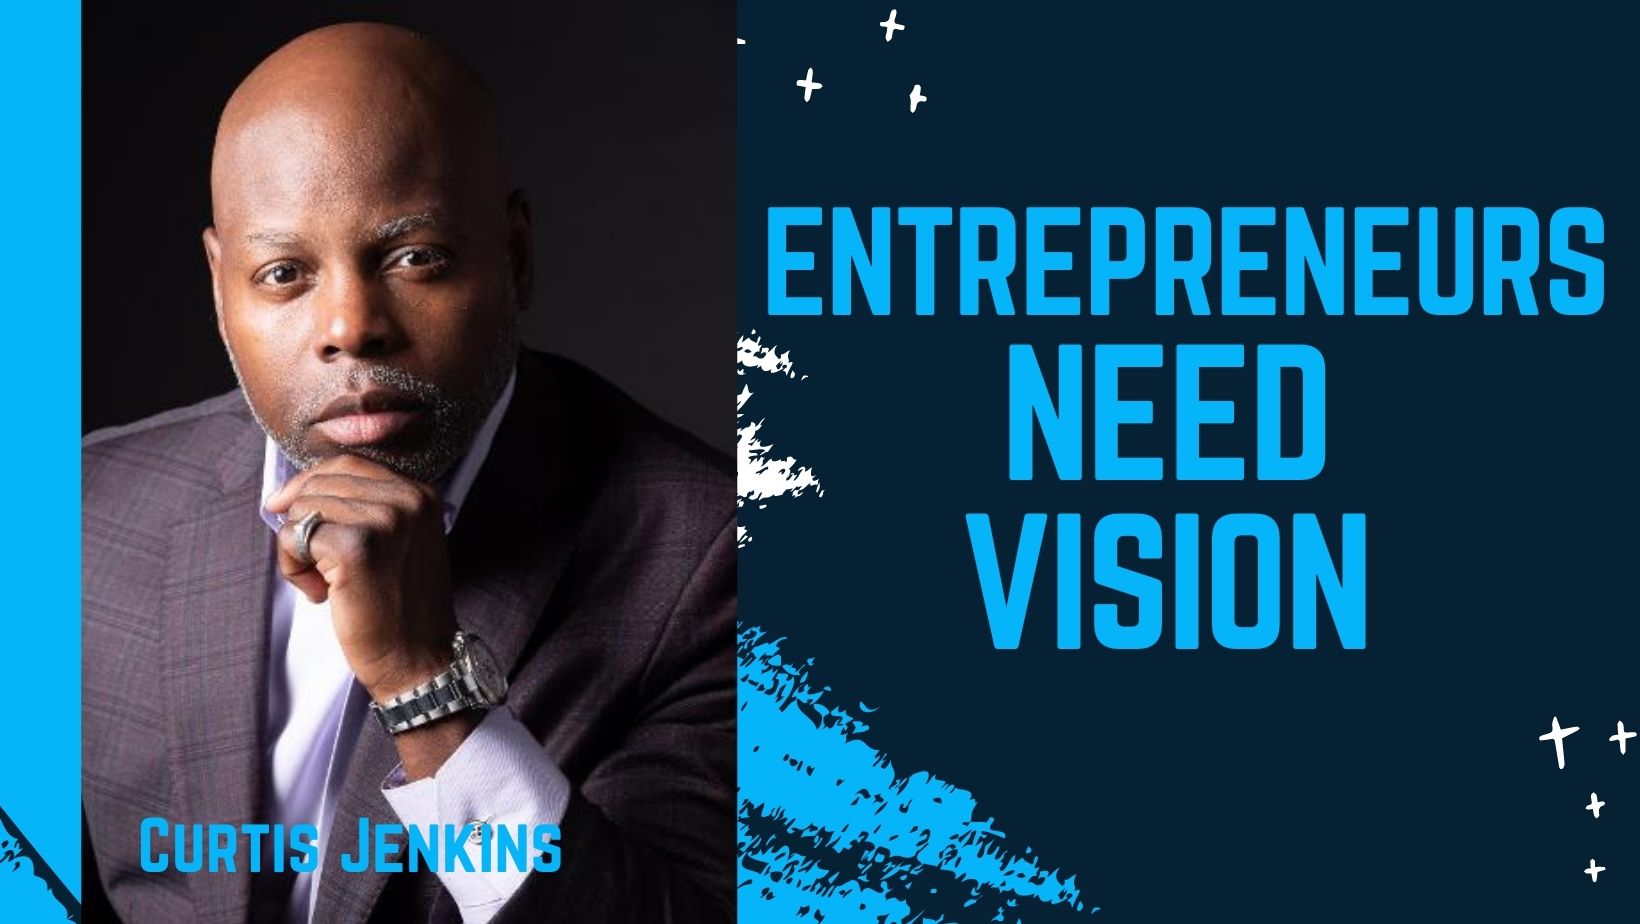 Entrepreneurs need vision